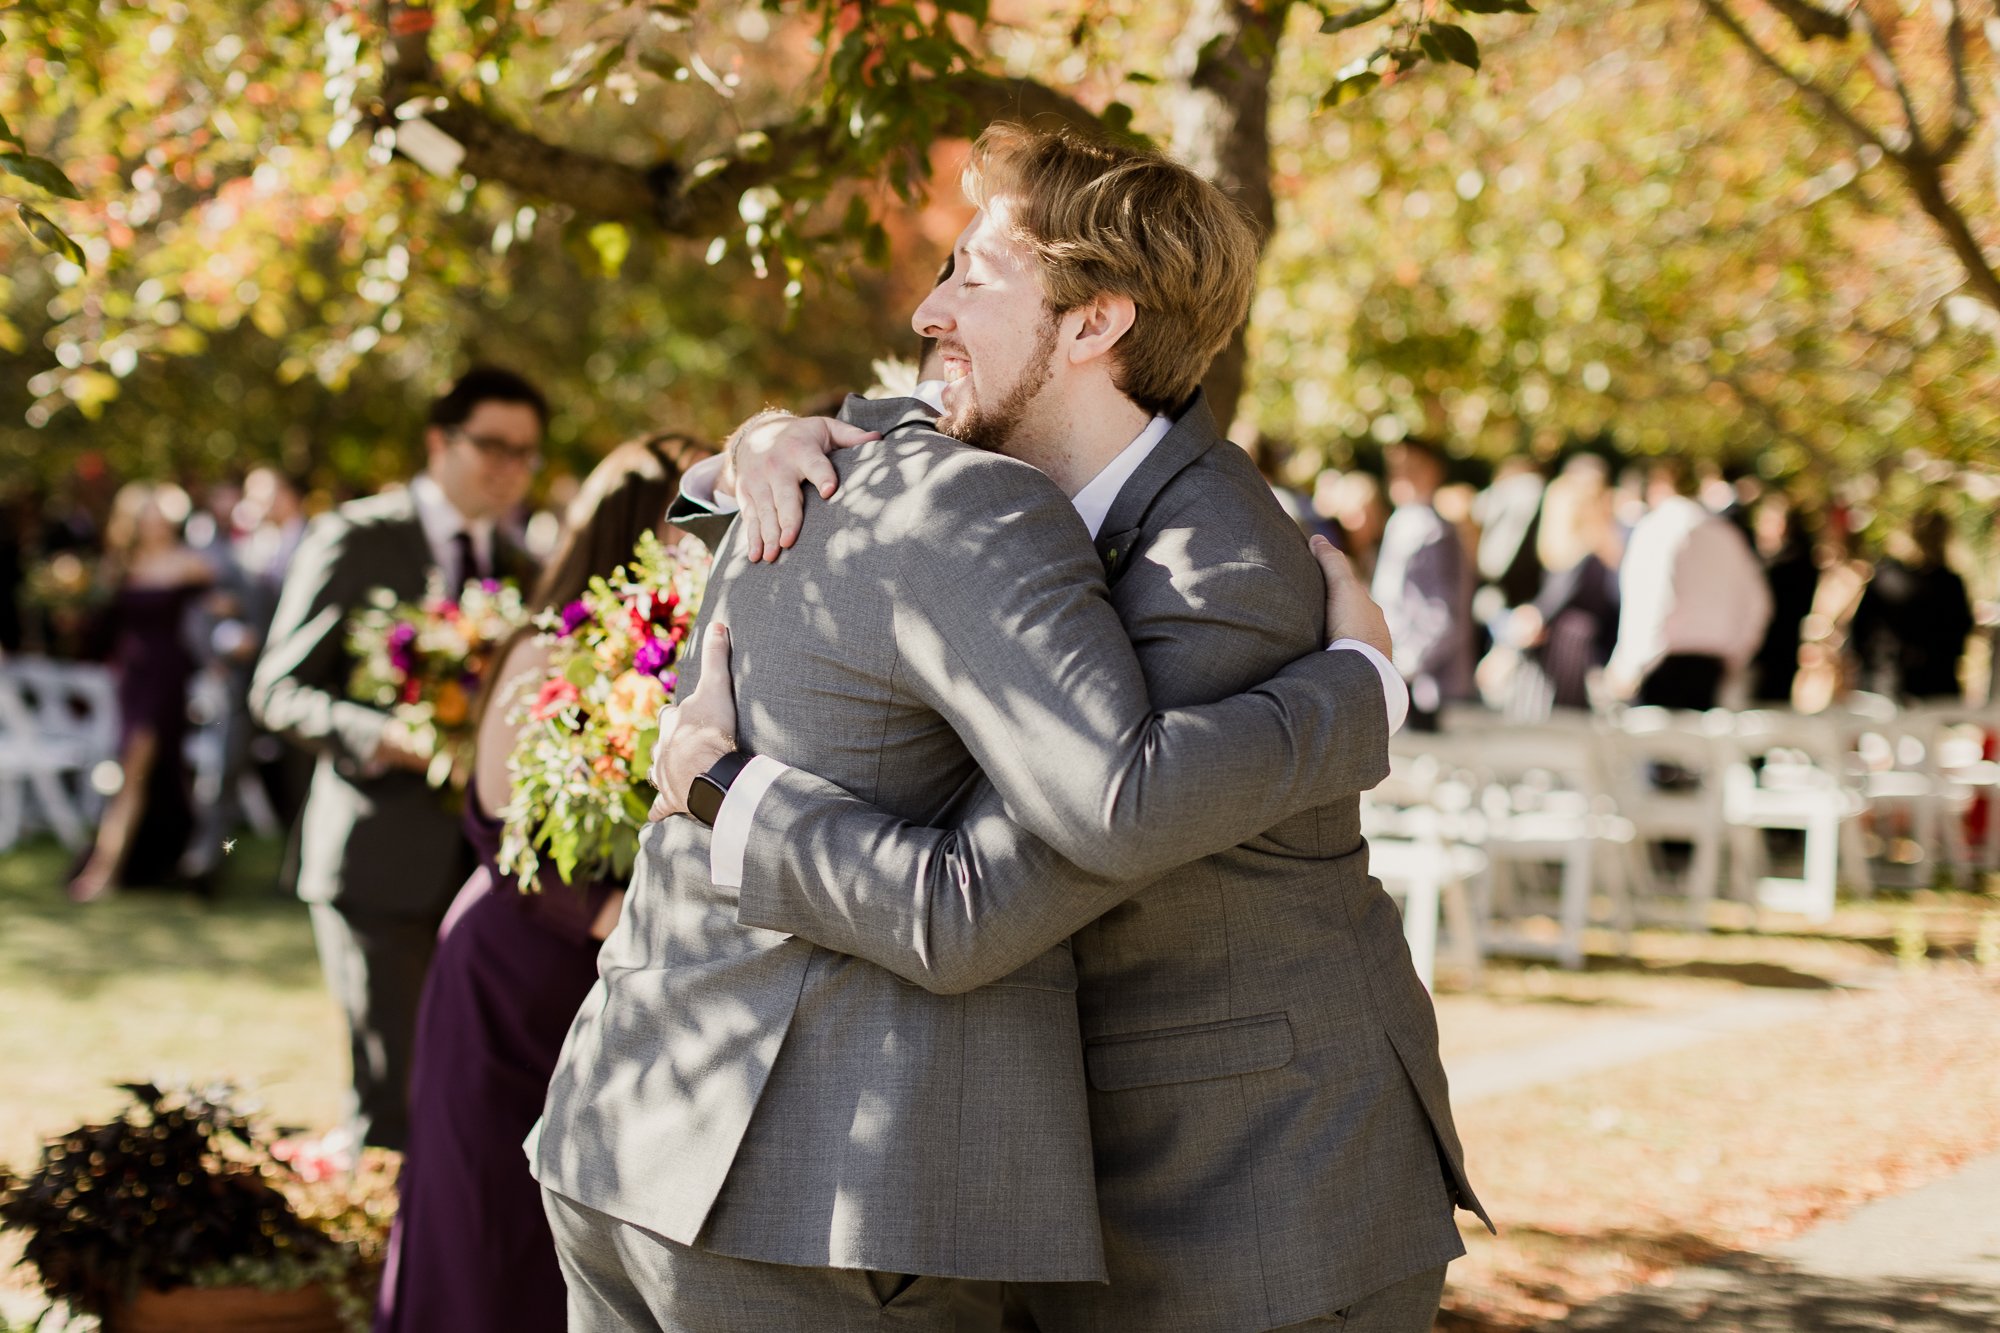 Minnesota Arboretum LGBTQ fall wedding photography-29.jpg